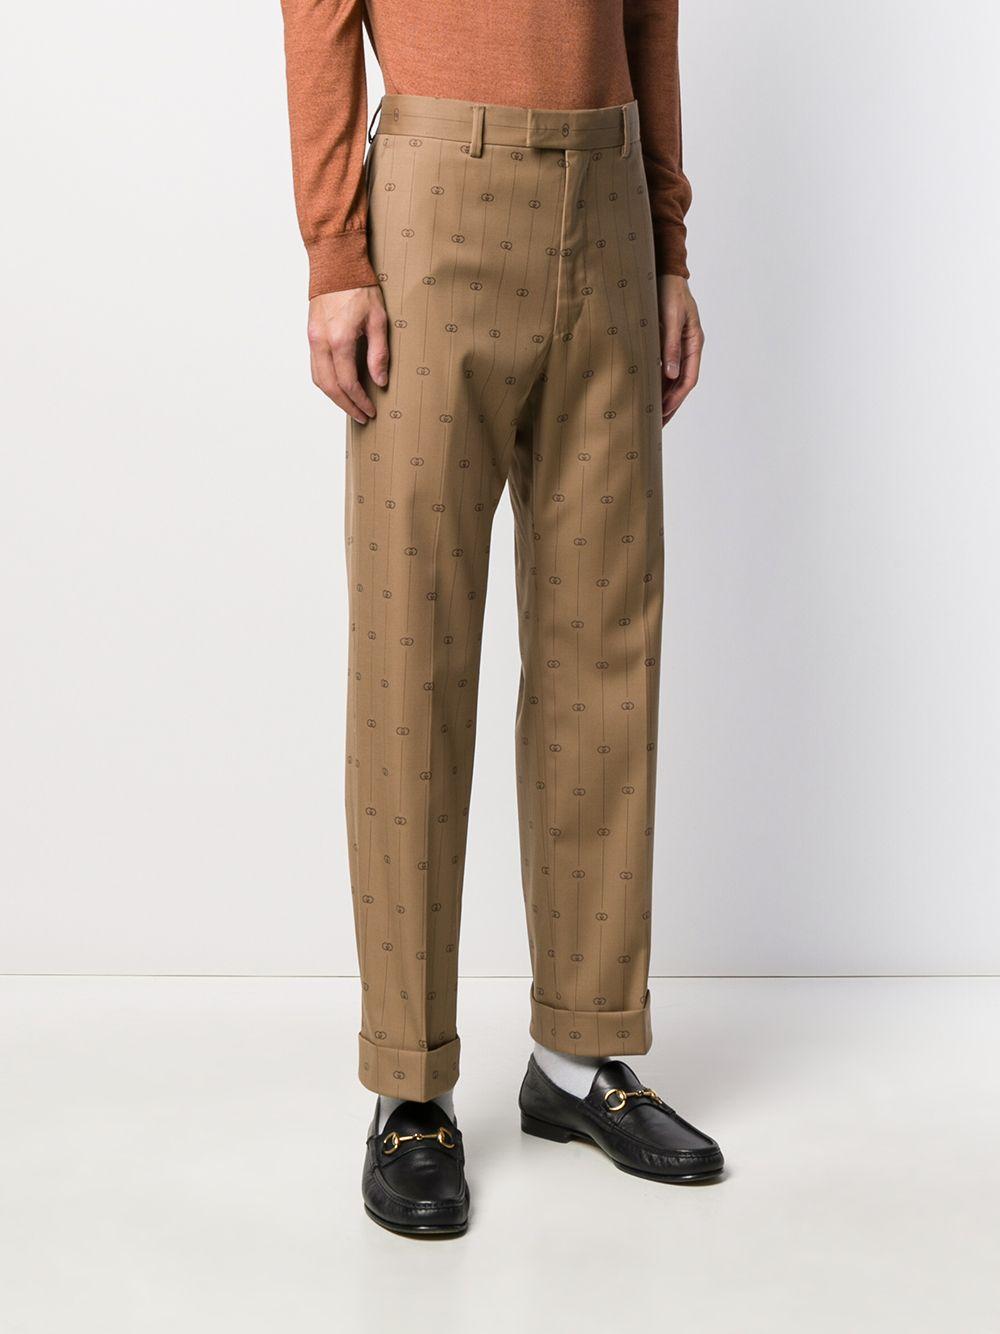 Gucci Cotton Interlocking G Stripe Trousers in Brown for Men - Lyst